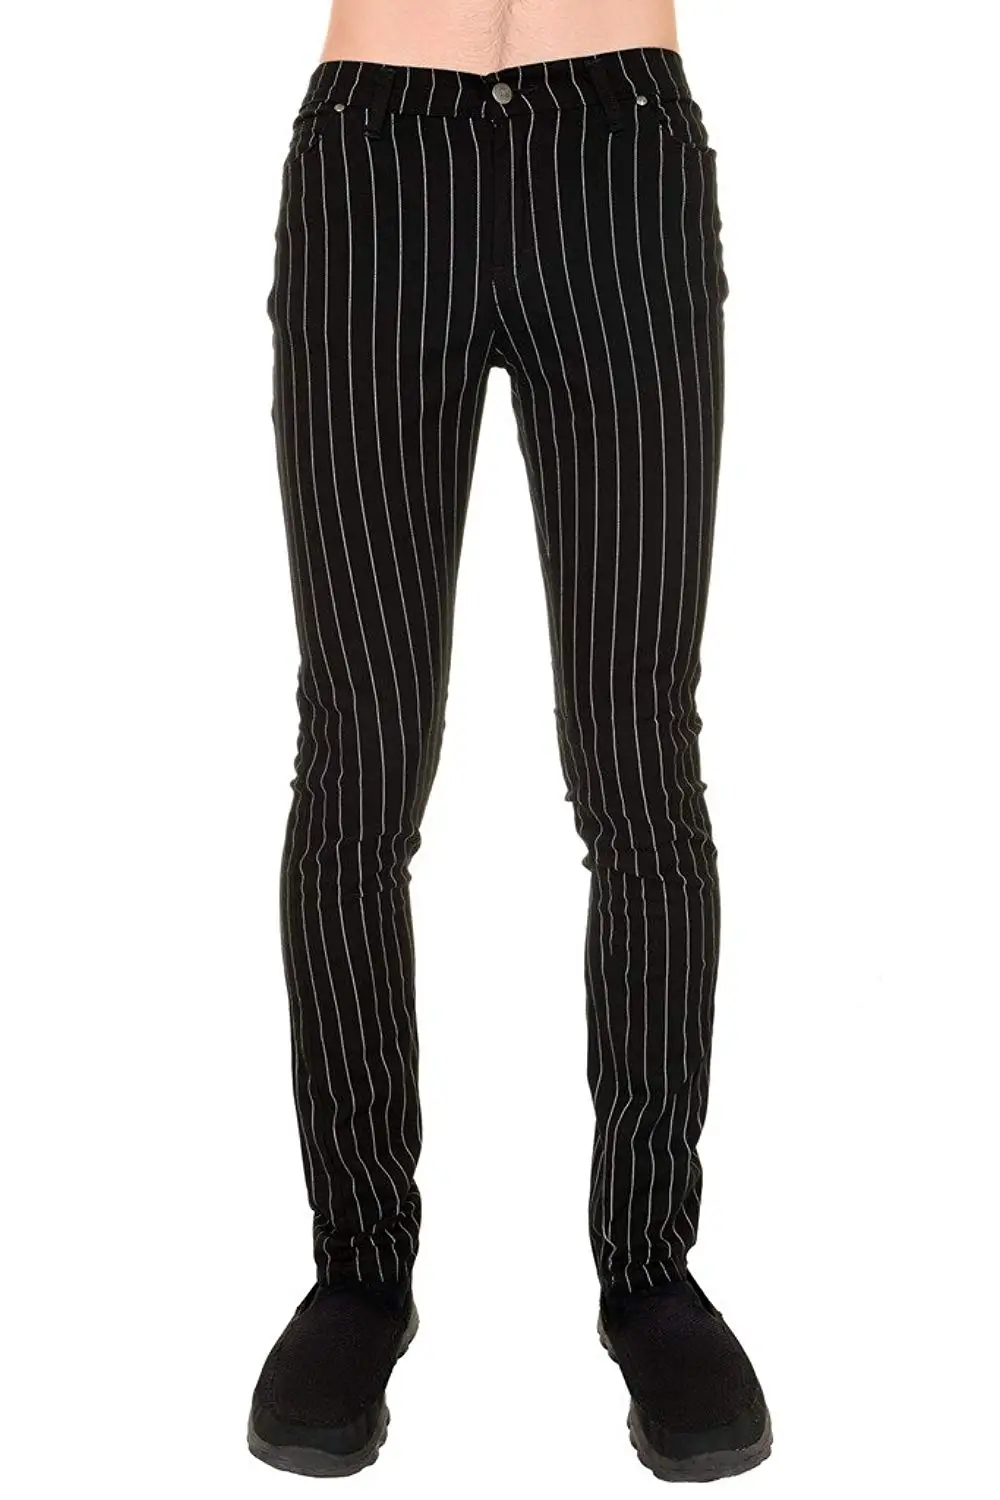 mens black and white striped skinny jeans